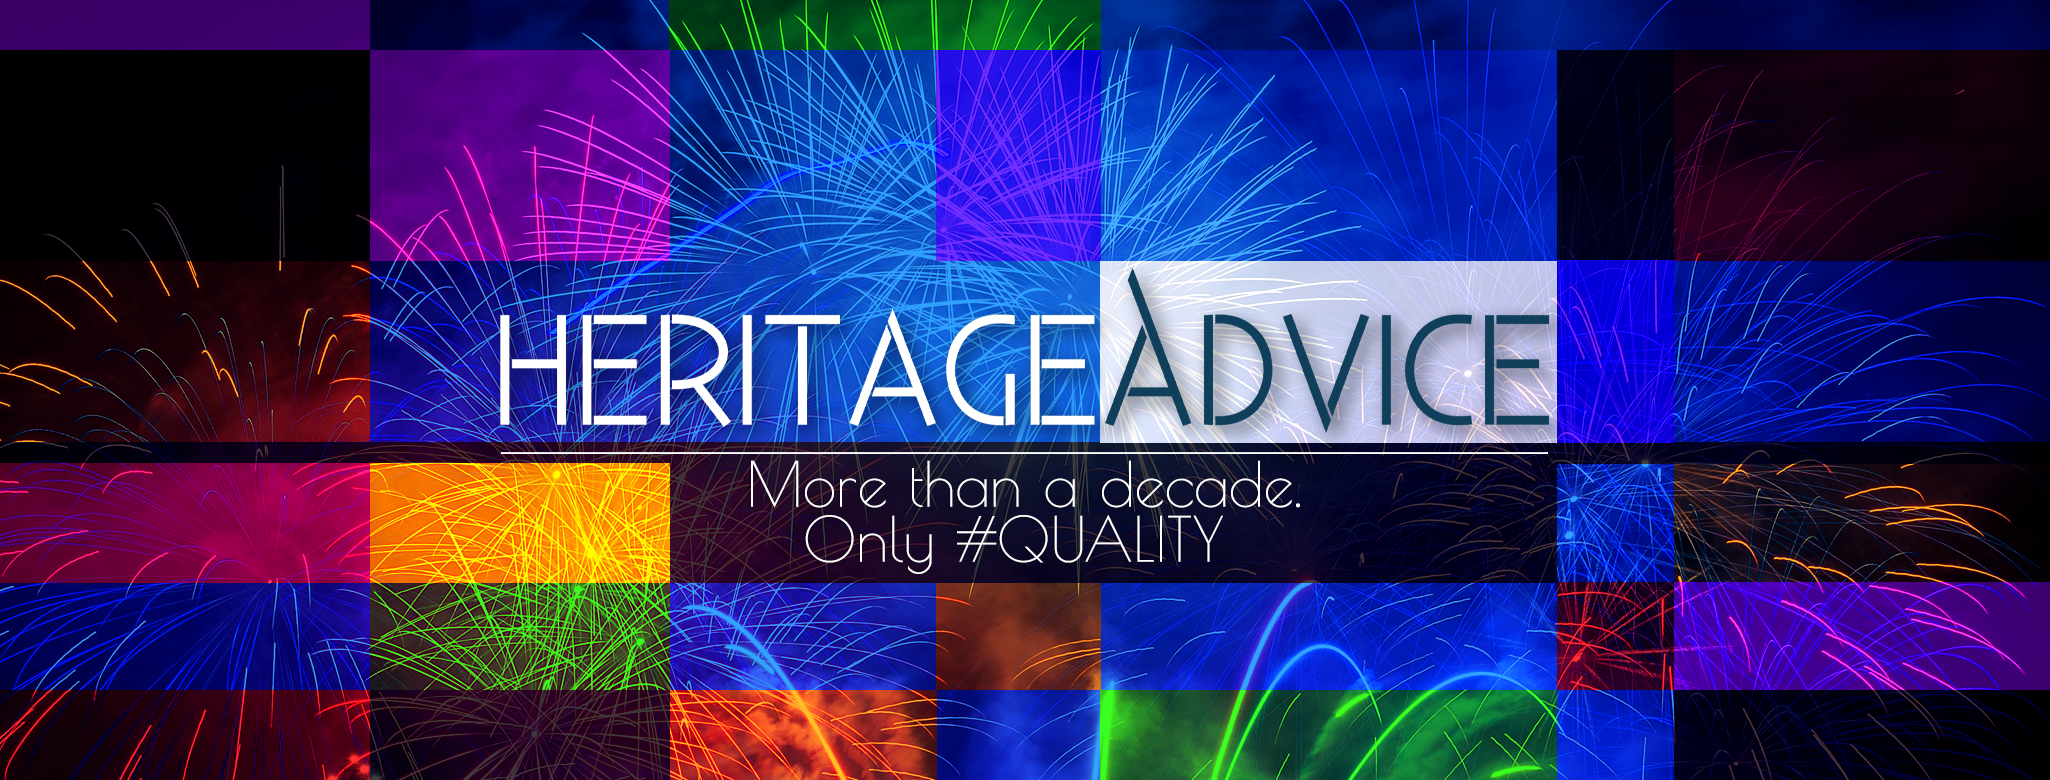 Heritage Advice SRL